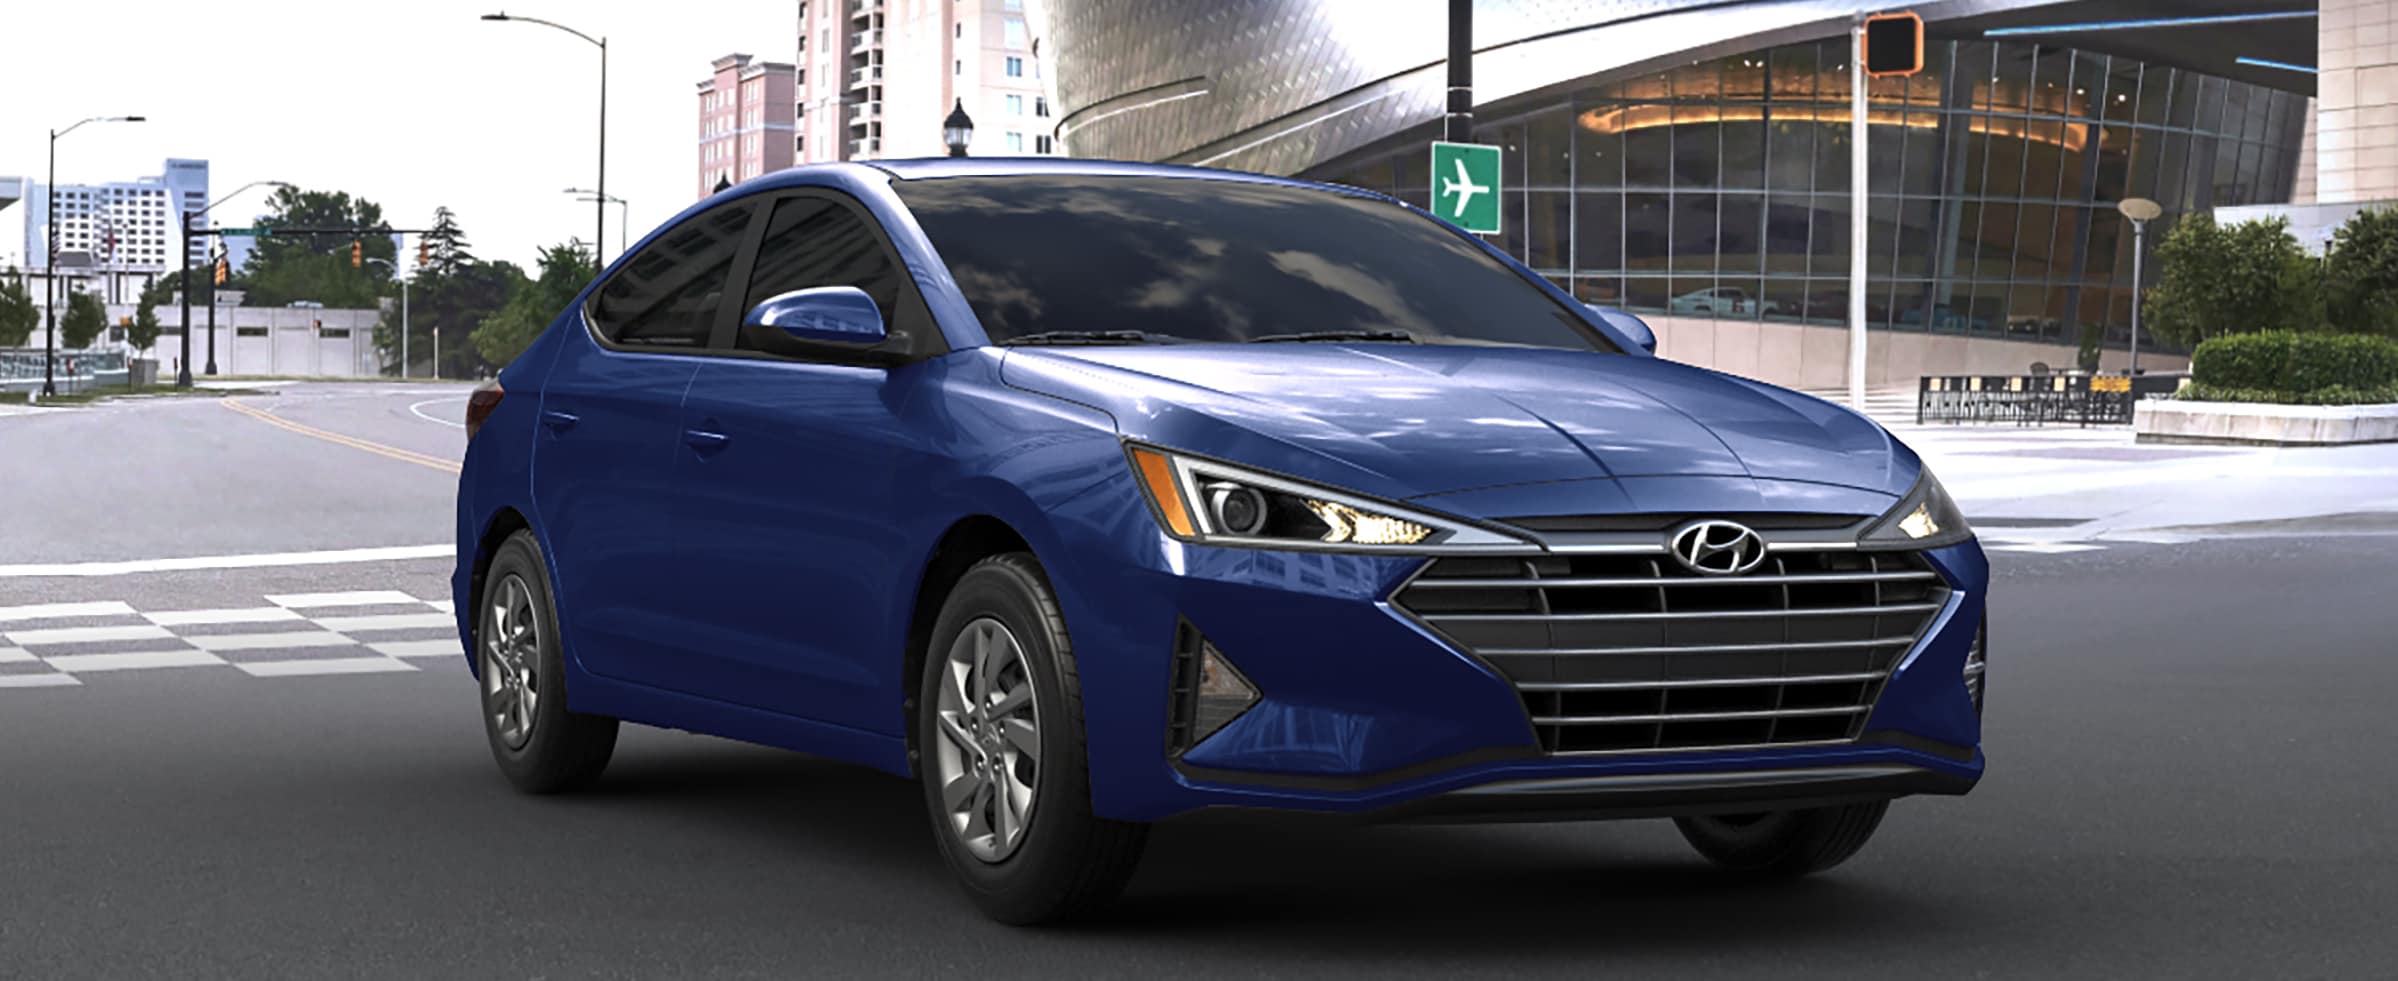 New Hyundai Elantra For Sale